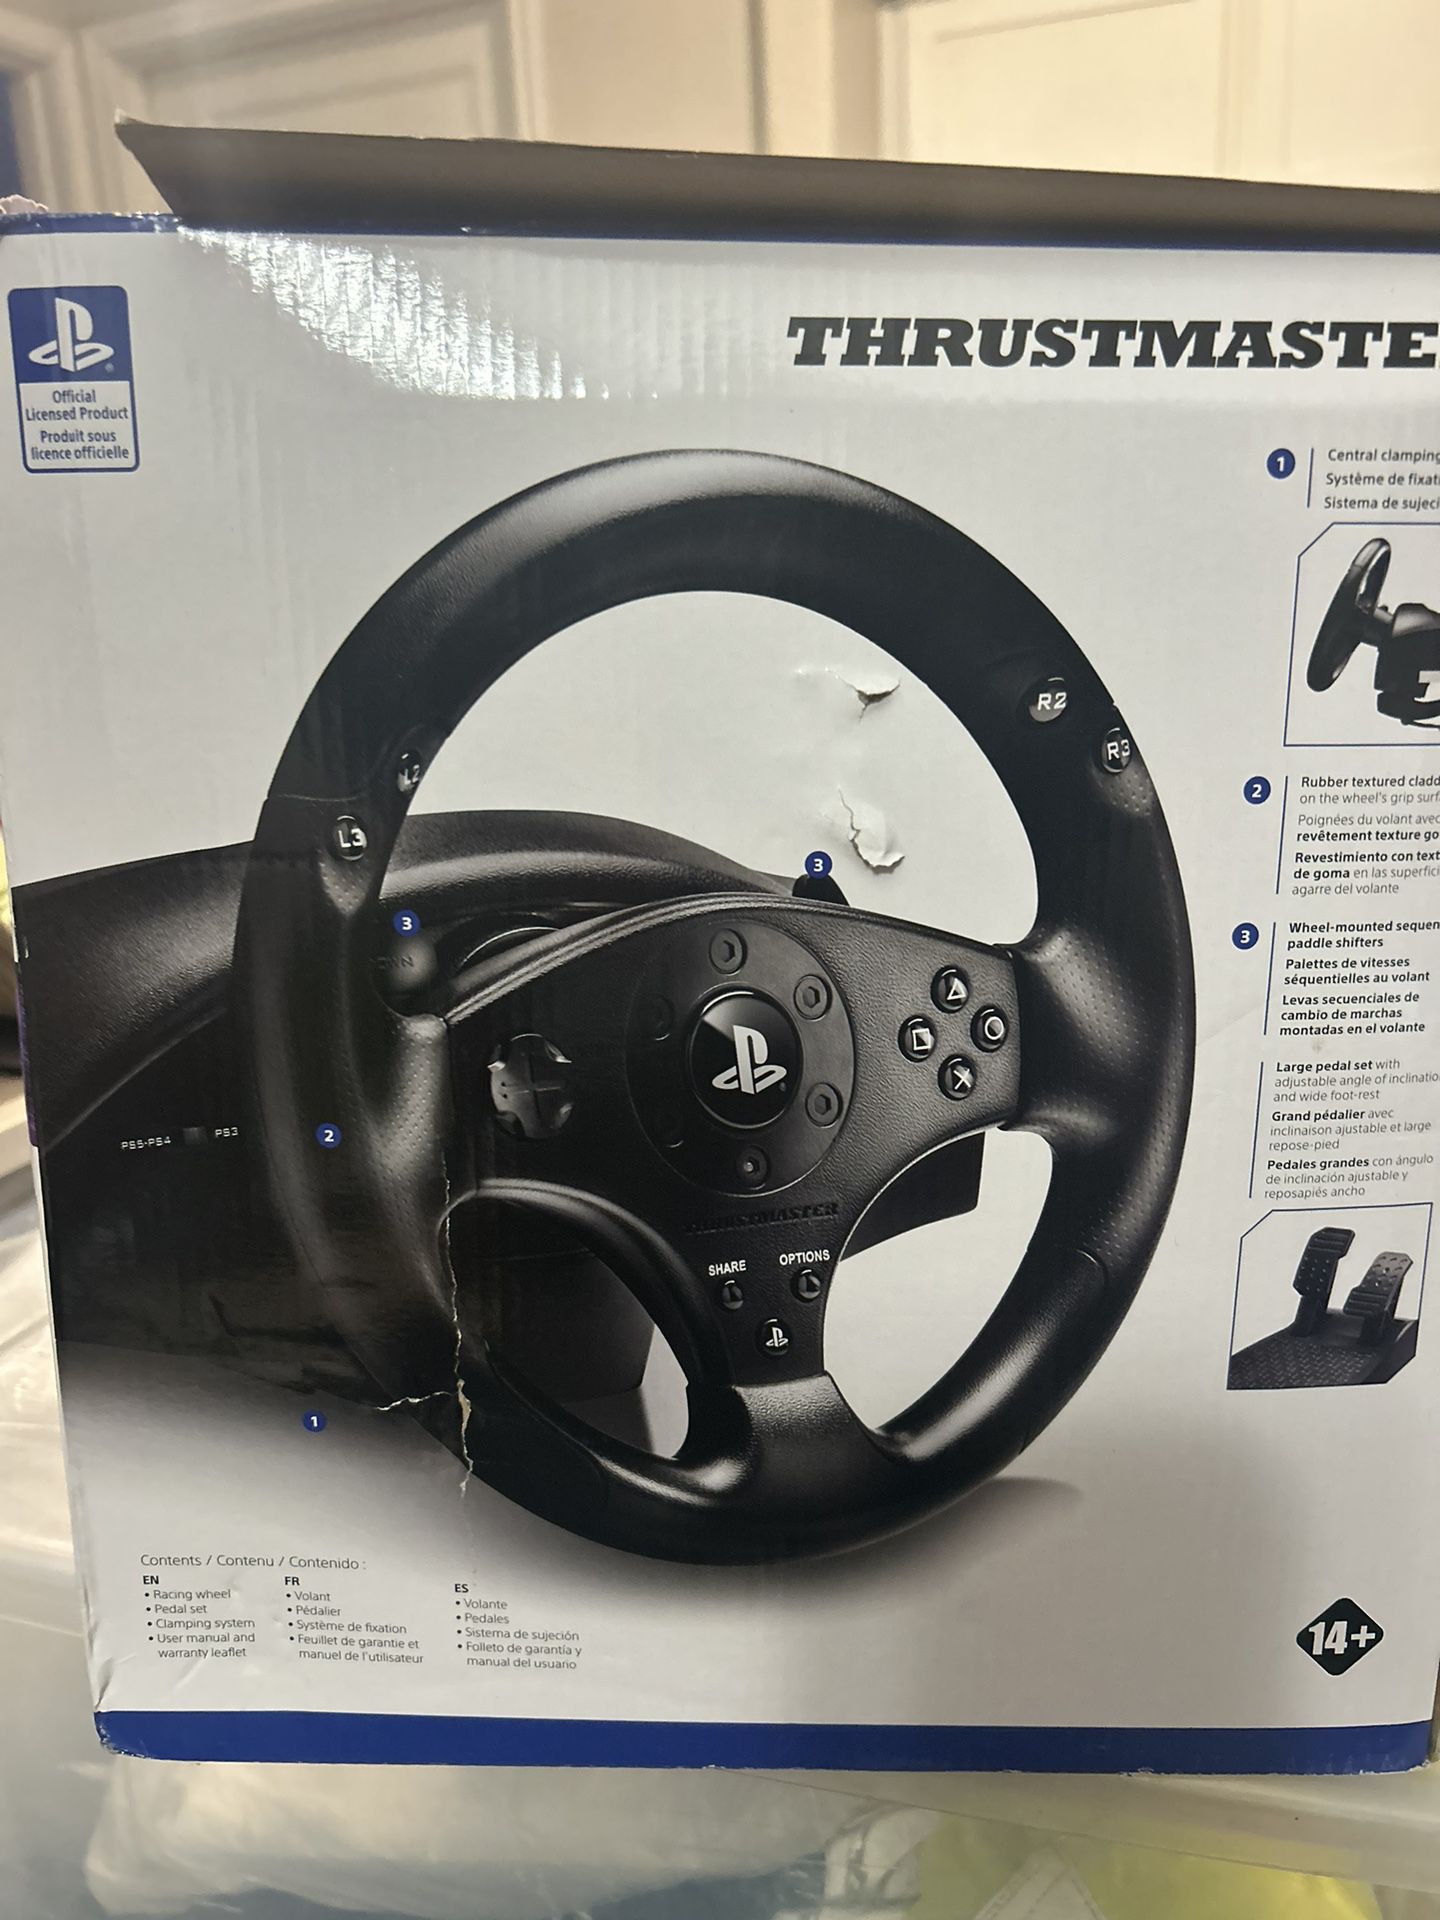 PS4/ps5 Steering Wheel Controller